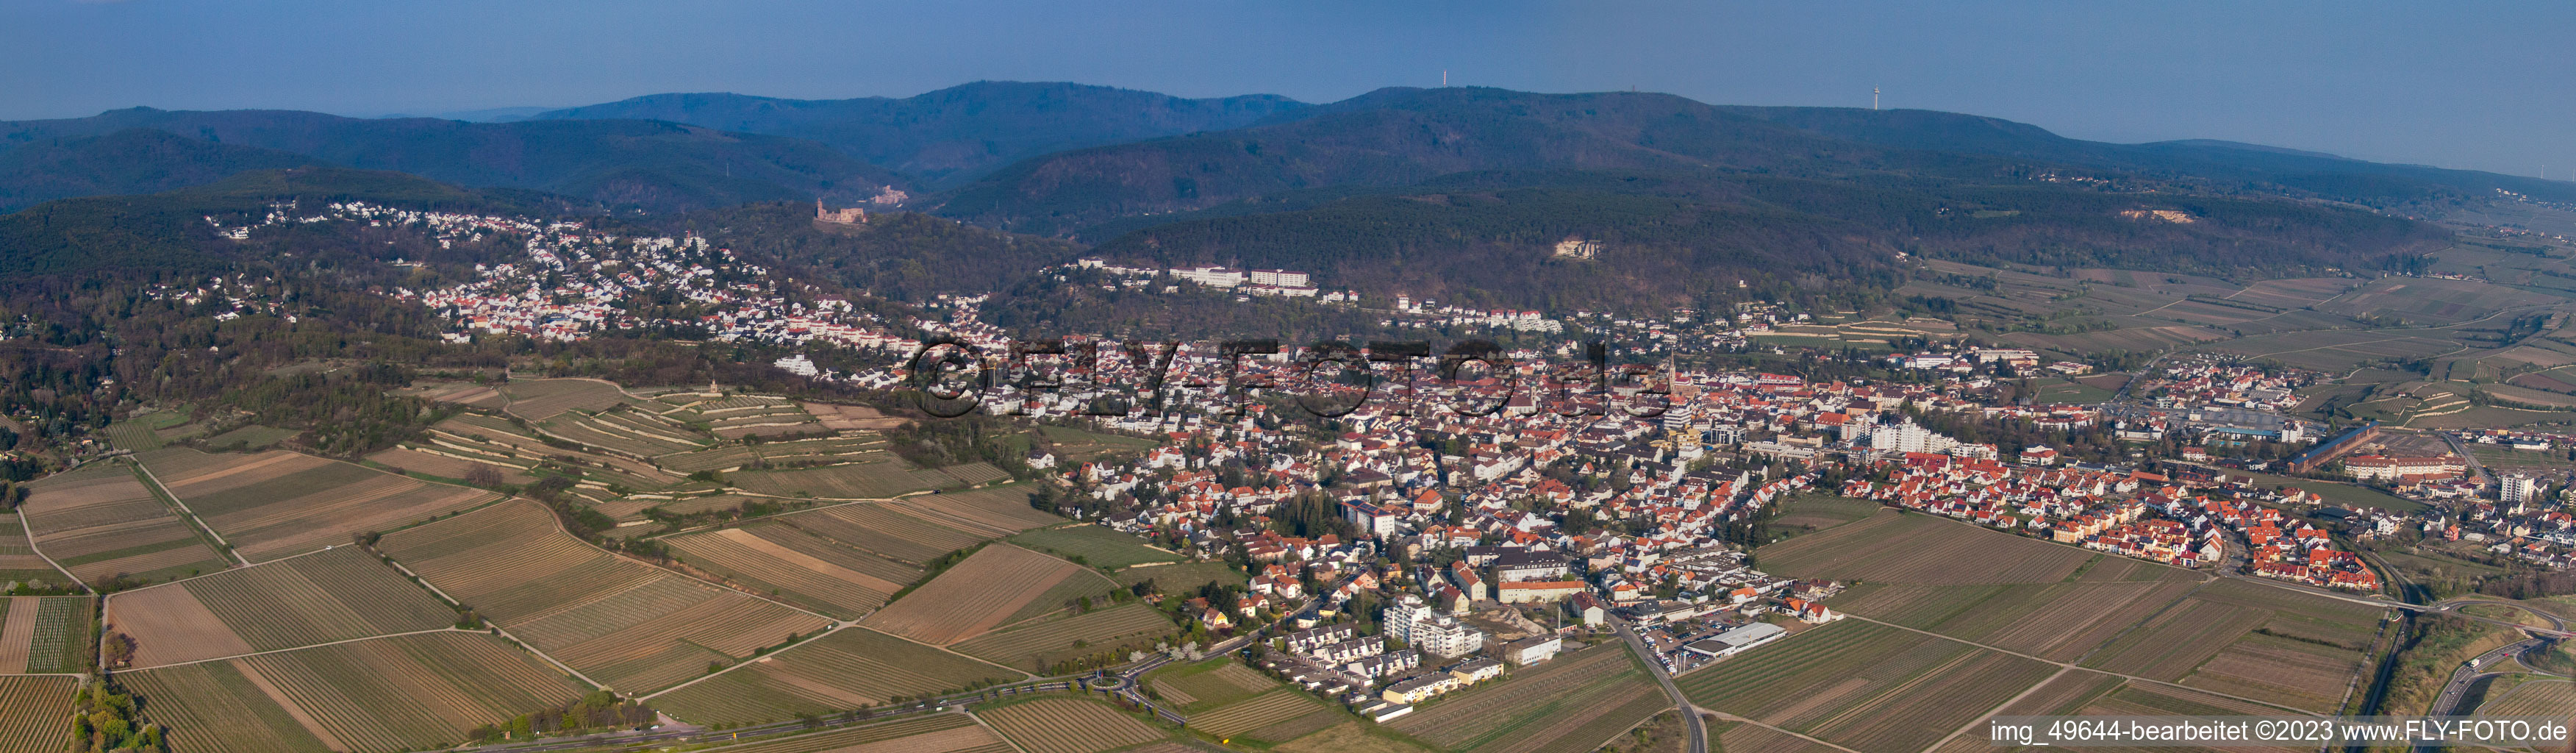 Panorama in the district Seebach in Bad Dürkheim in the state Rhineland-Palatinate, Germany